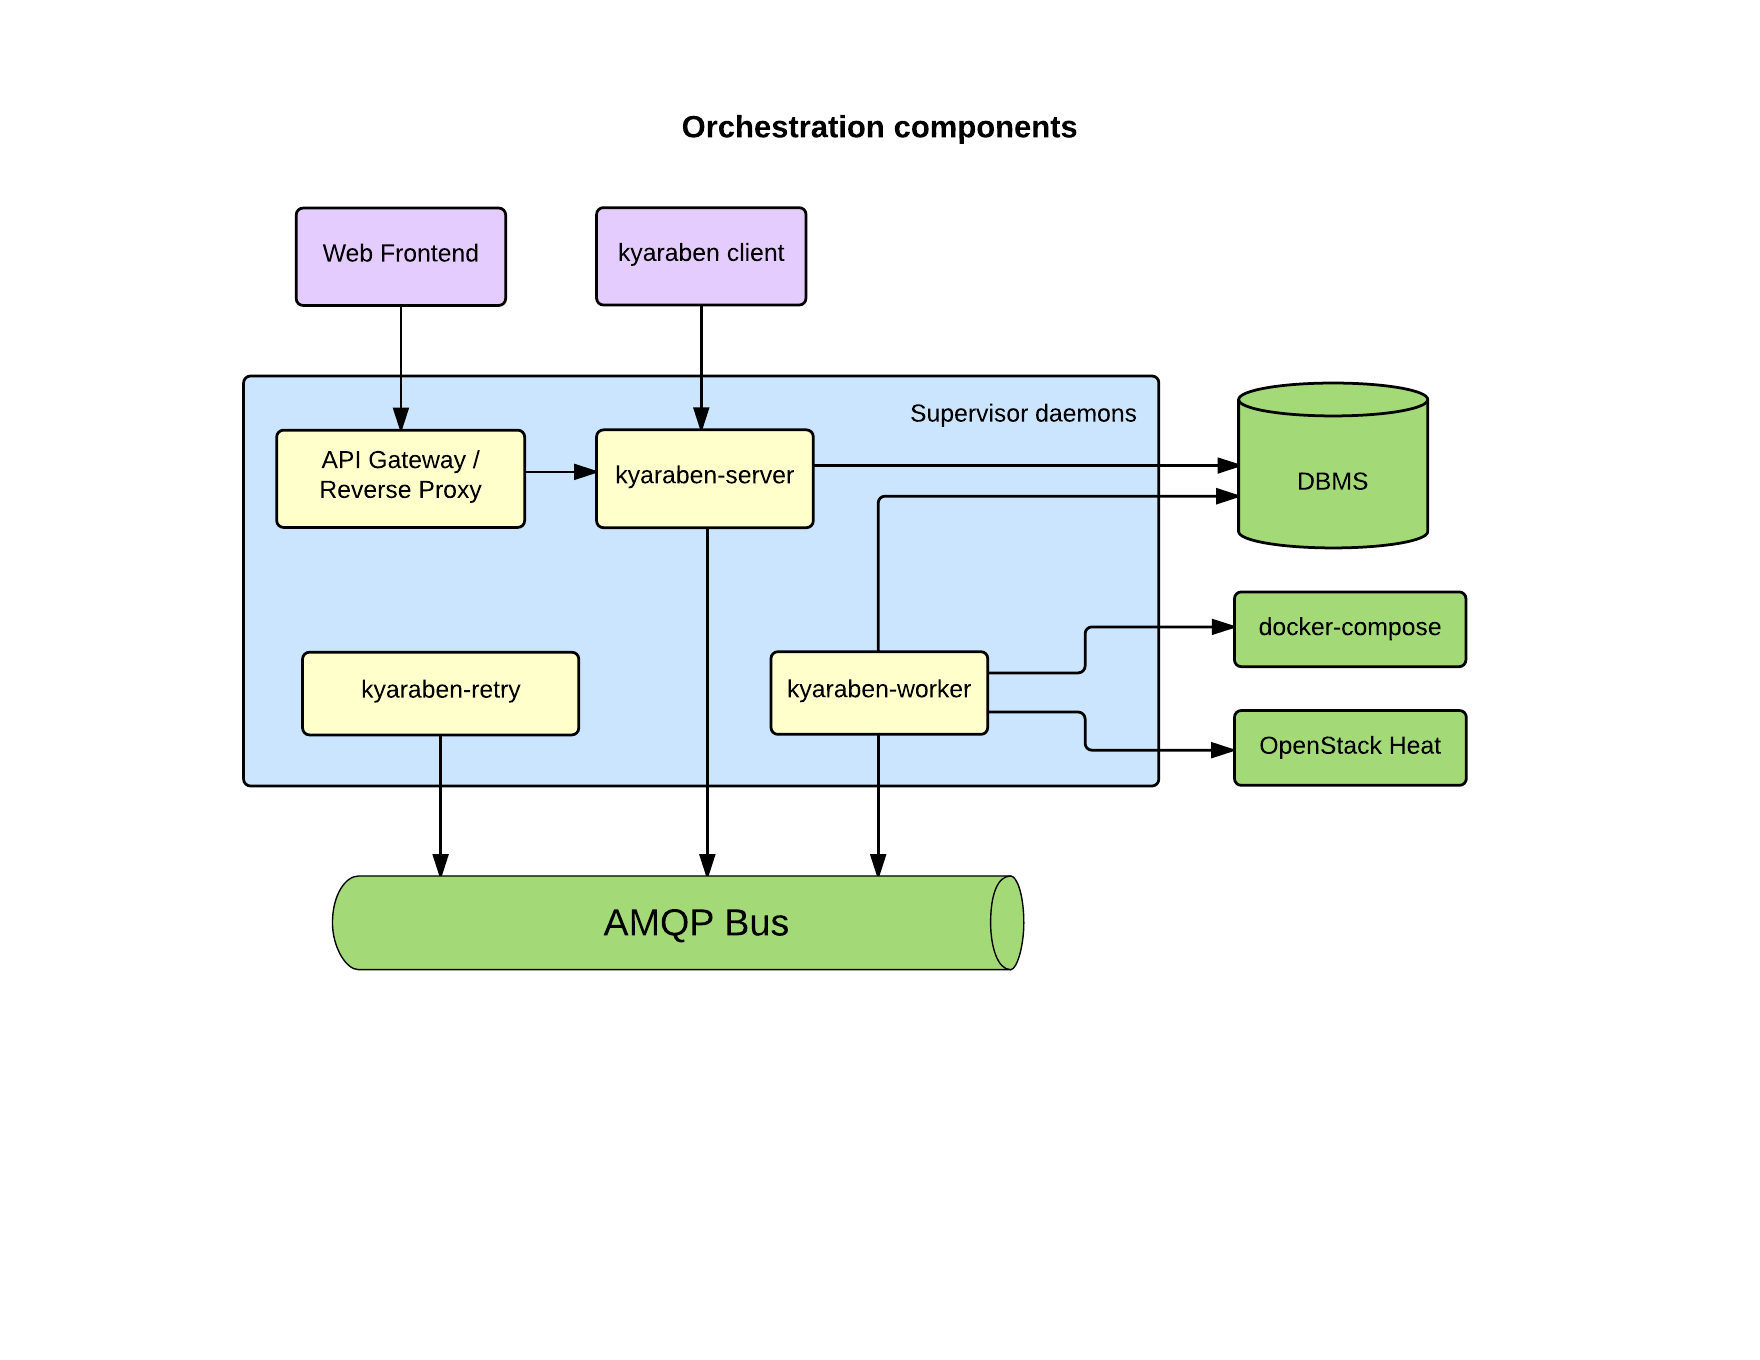 Architecture Diagrams Aic Build Deployment Tool 0 8 Documentation